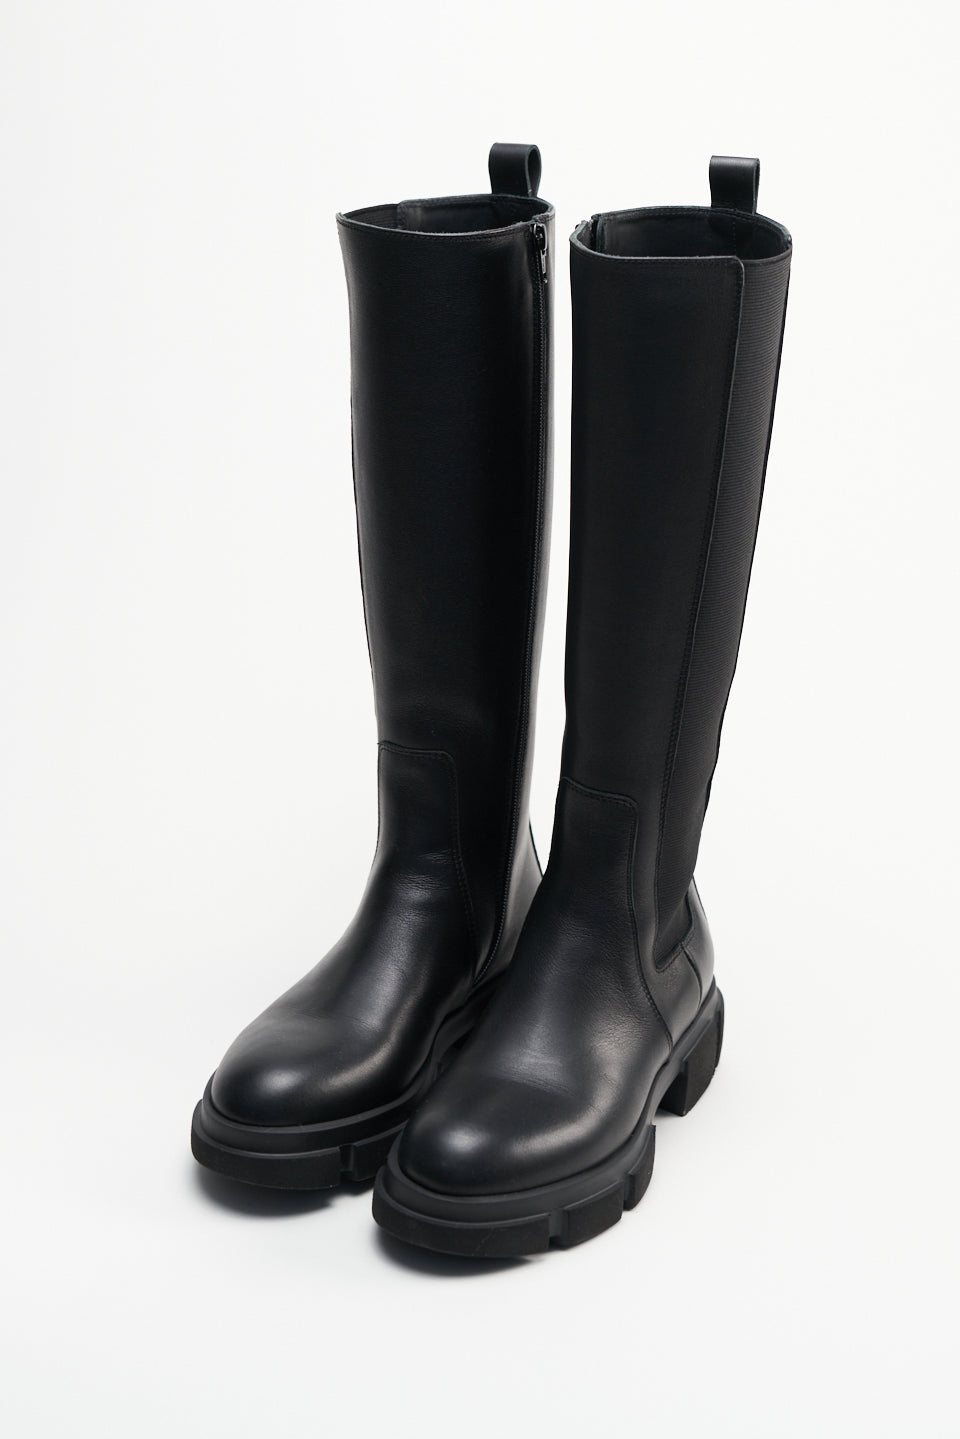 Vitello Black High Chelsea Boots CPH667BLACK - 3